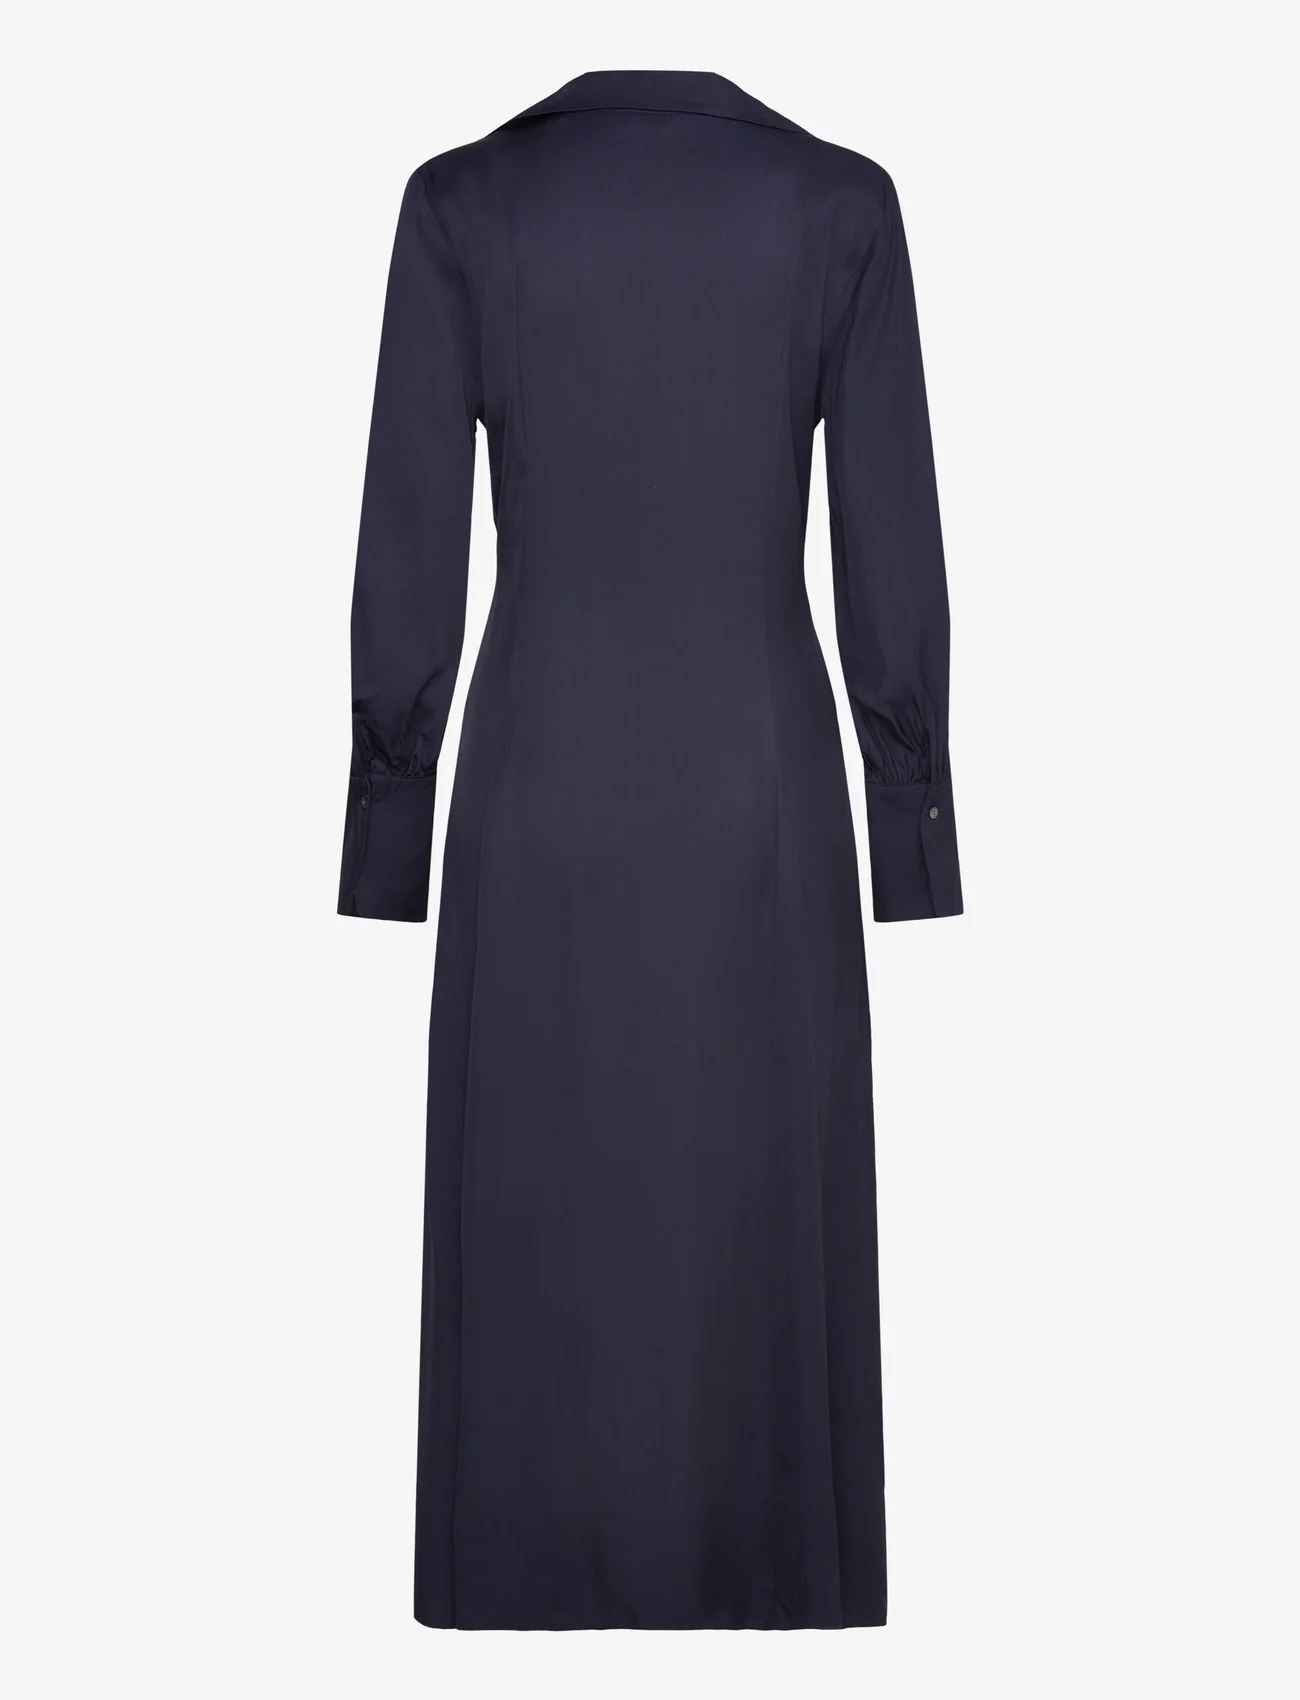 GANT - SLIM HIGH CUFF DRESS - midi-jurken - evening blue - 1